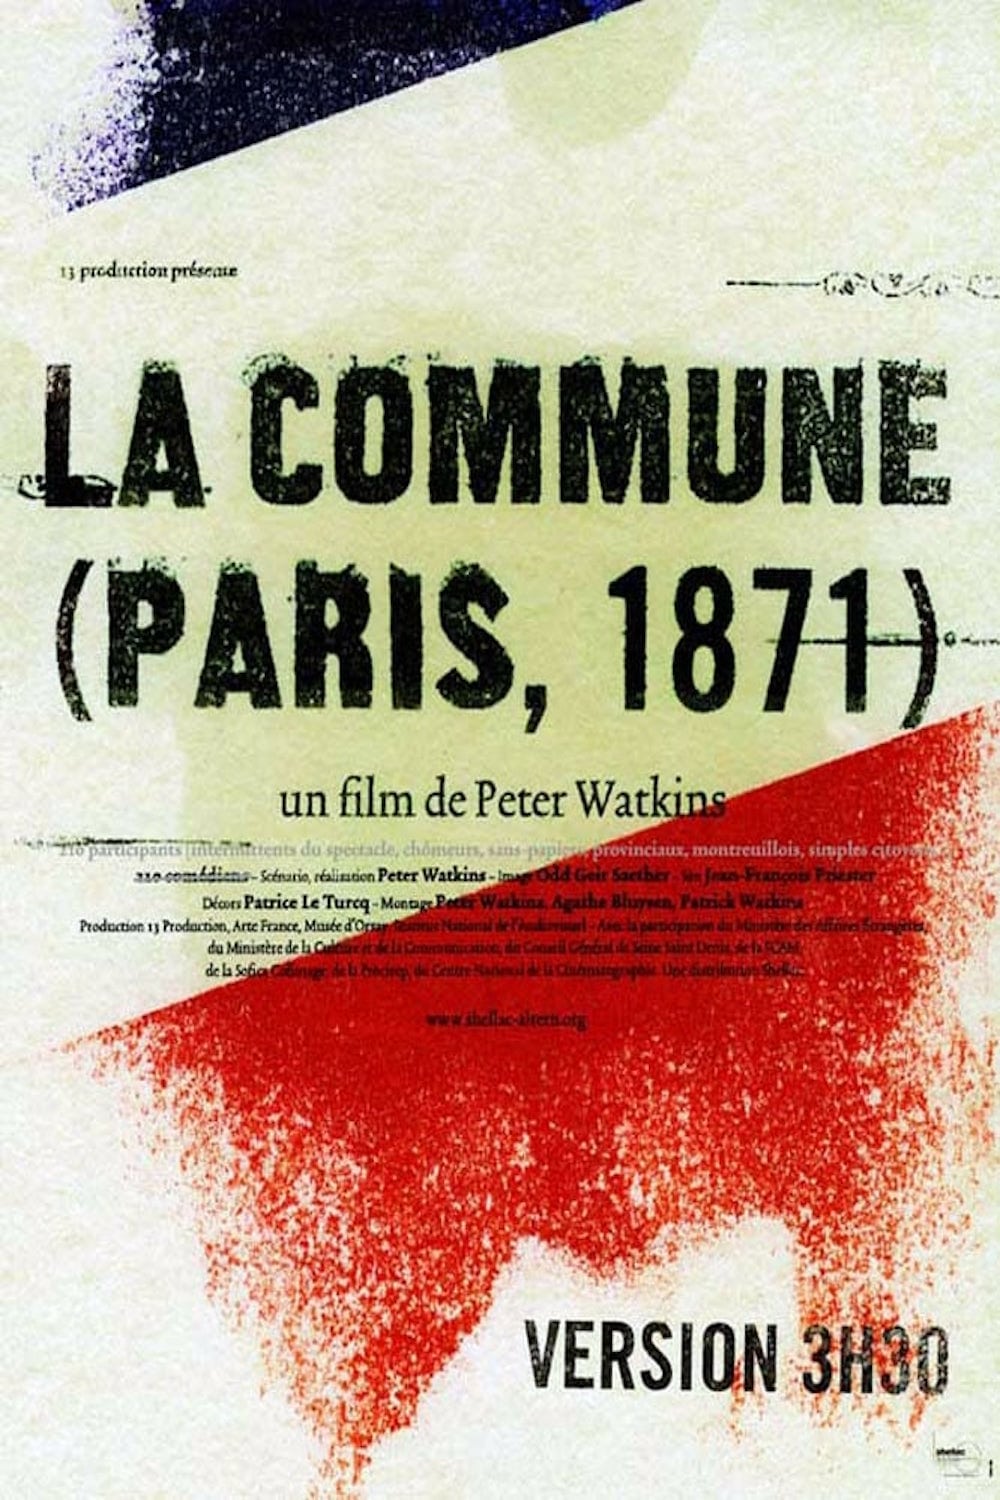 La Commune (Paris, 1871)